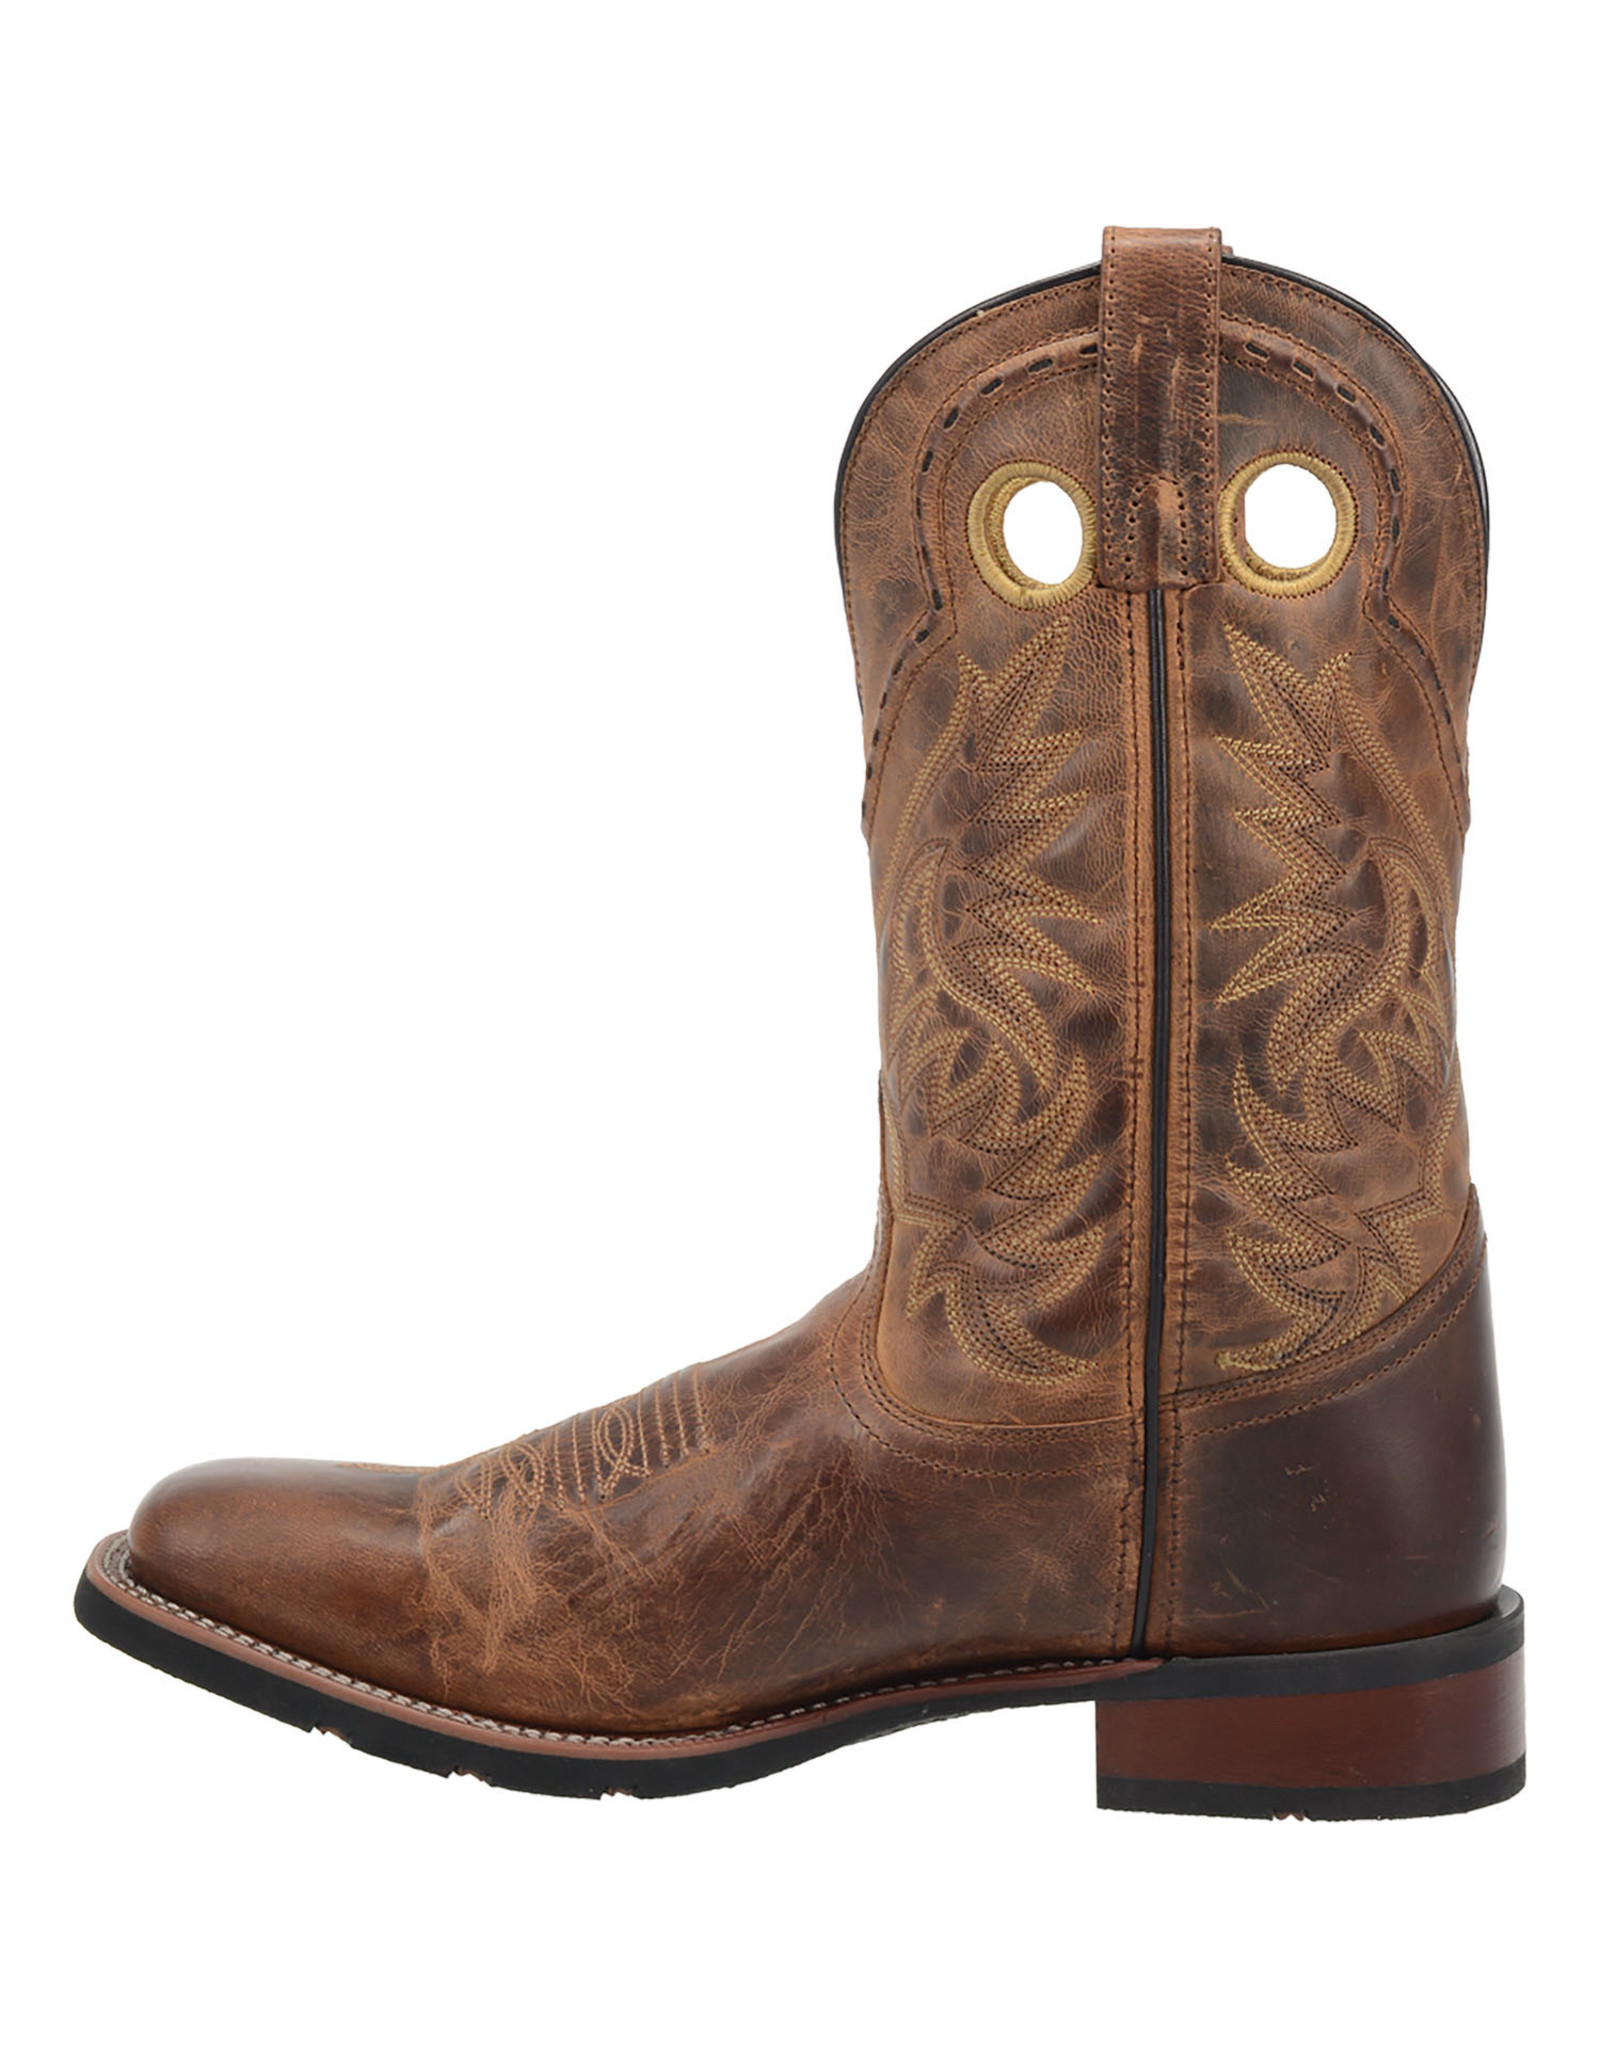 Laredo Men's Kane 7812 Distressed Western Boots